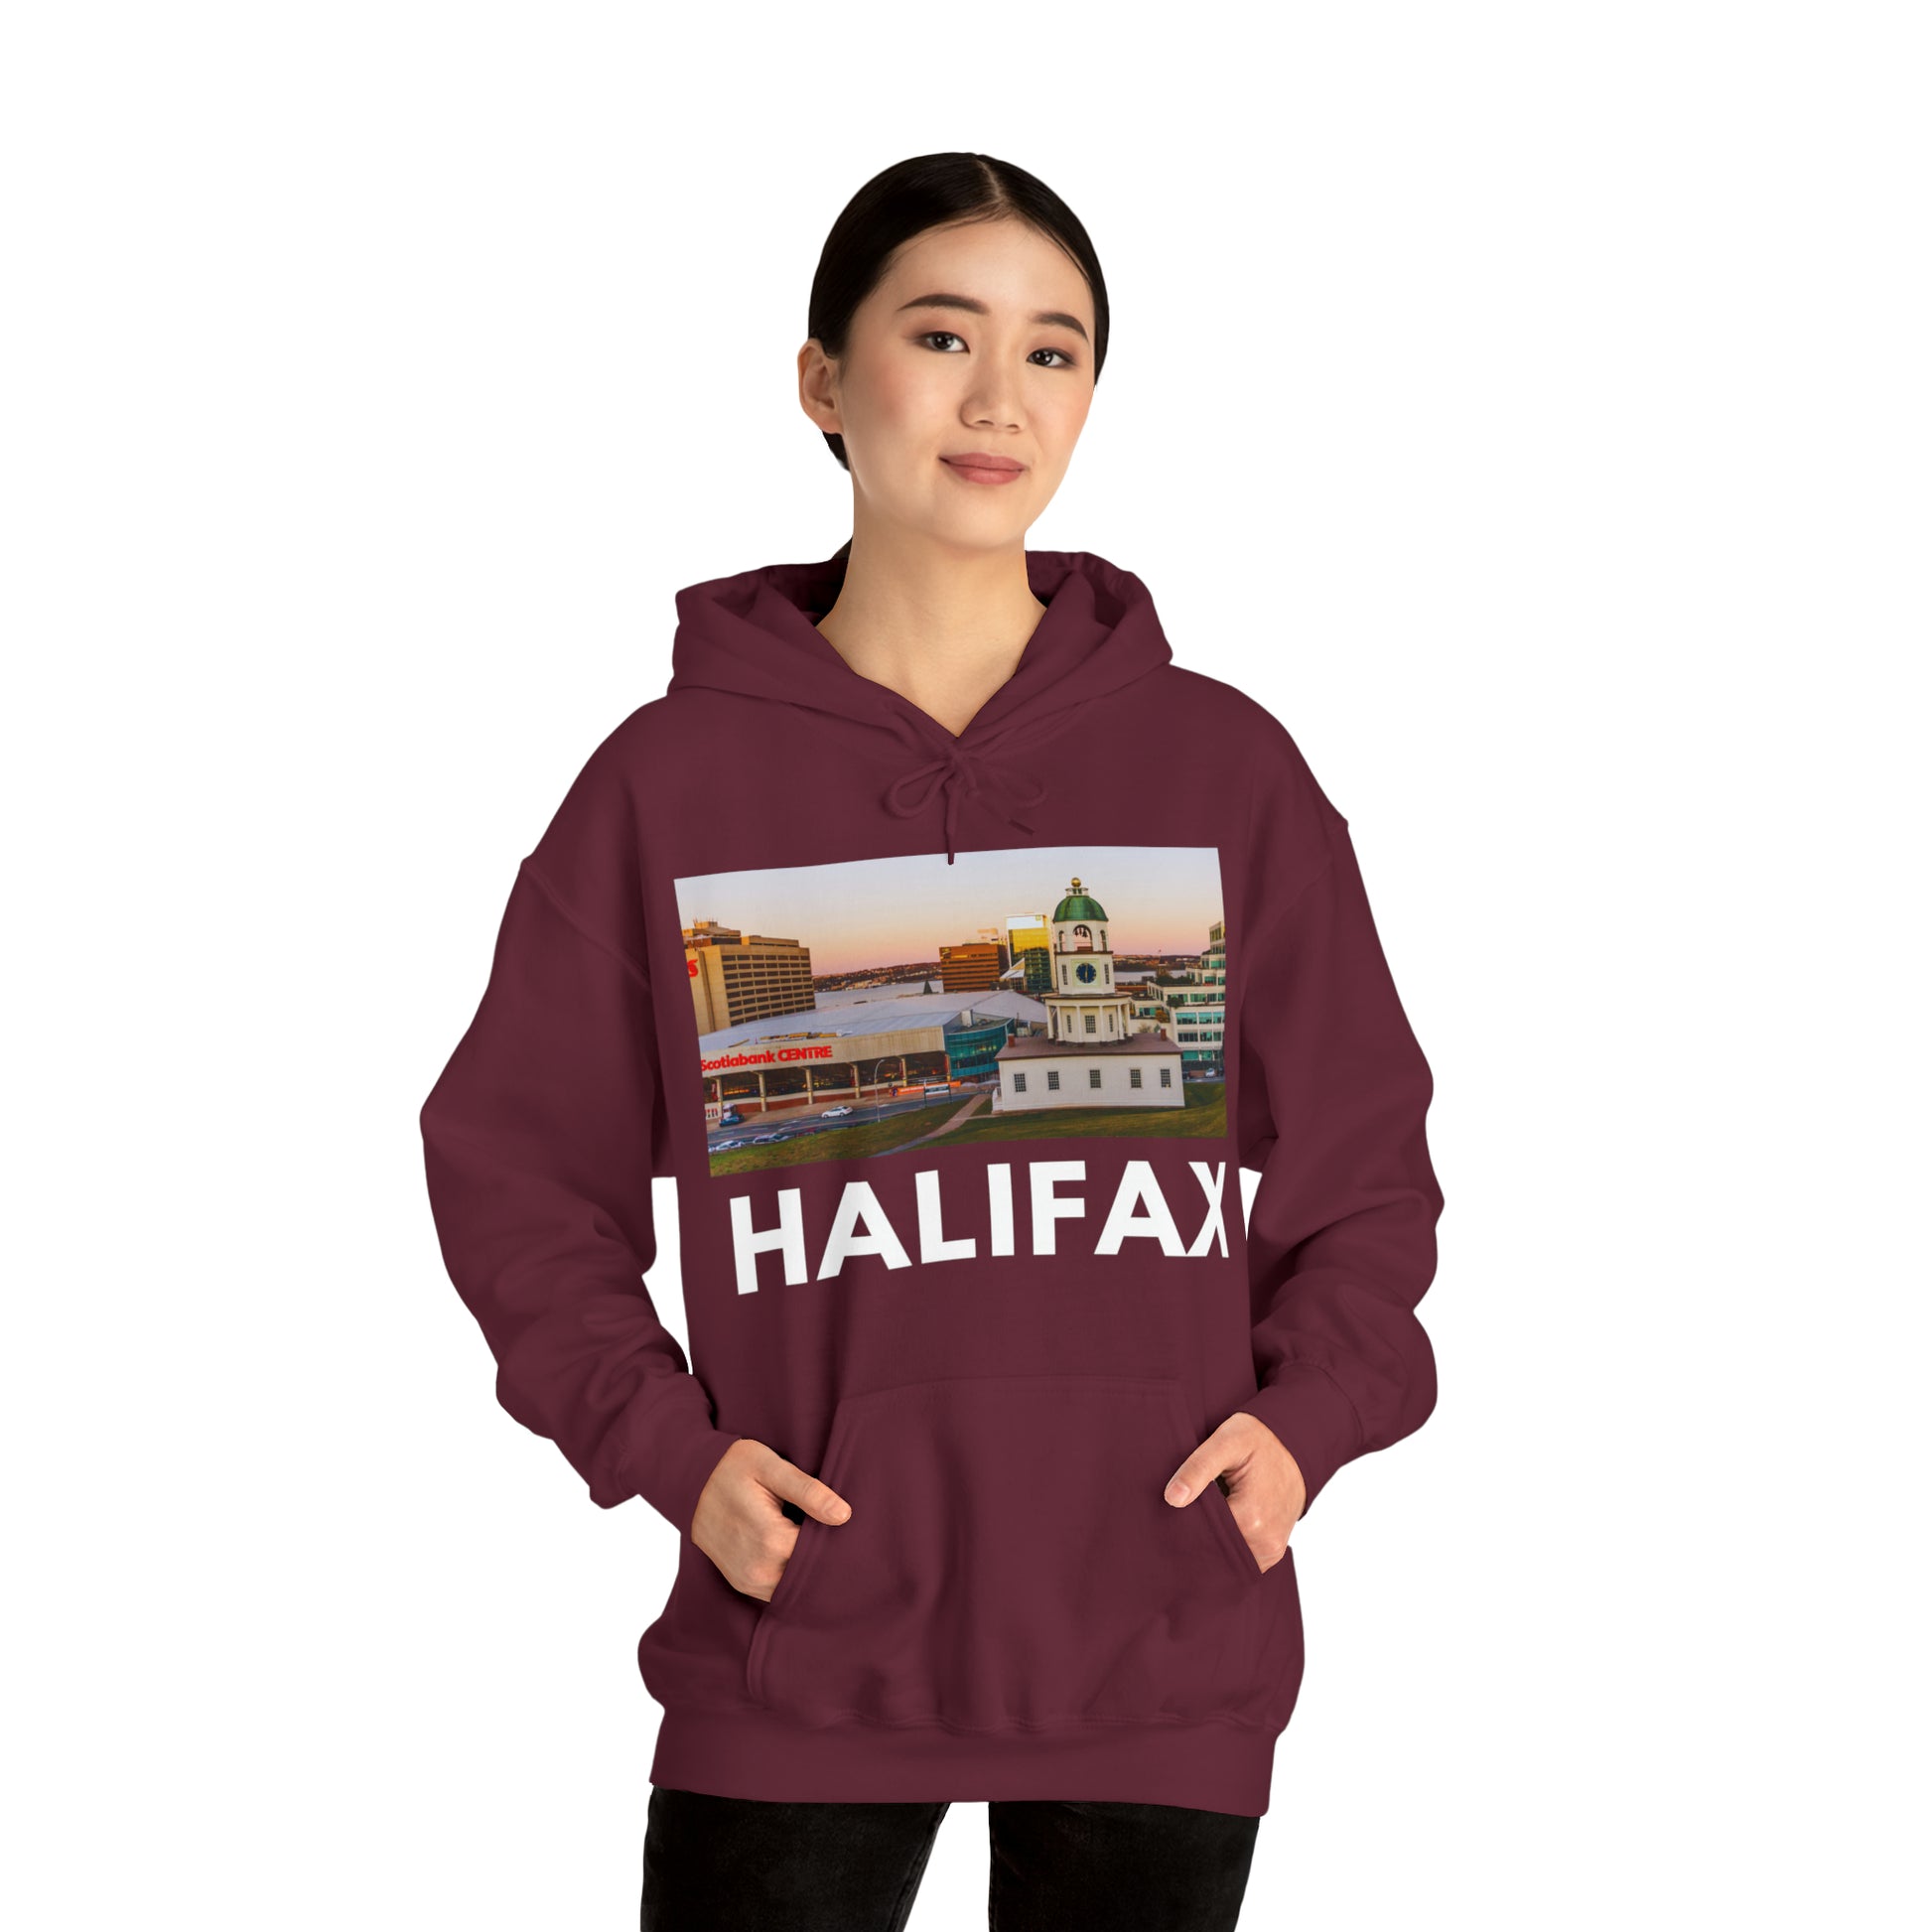   Halifax Hoodie: Citadel Hill from HoodySZN.com